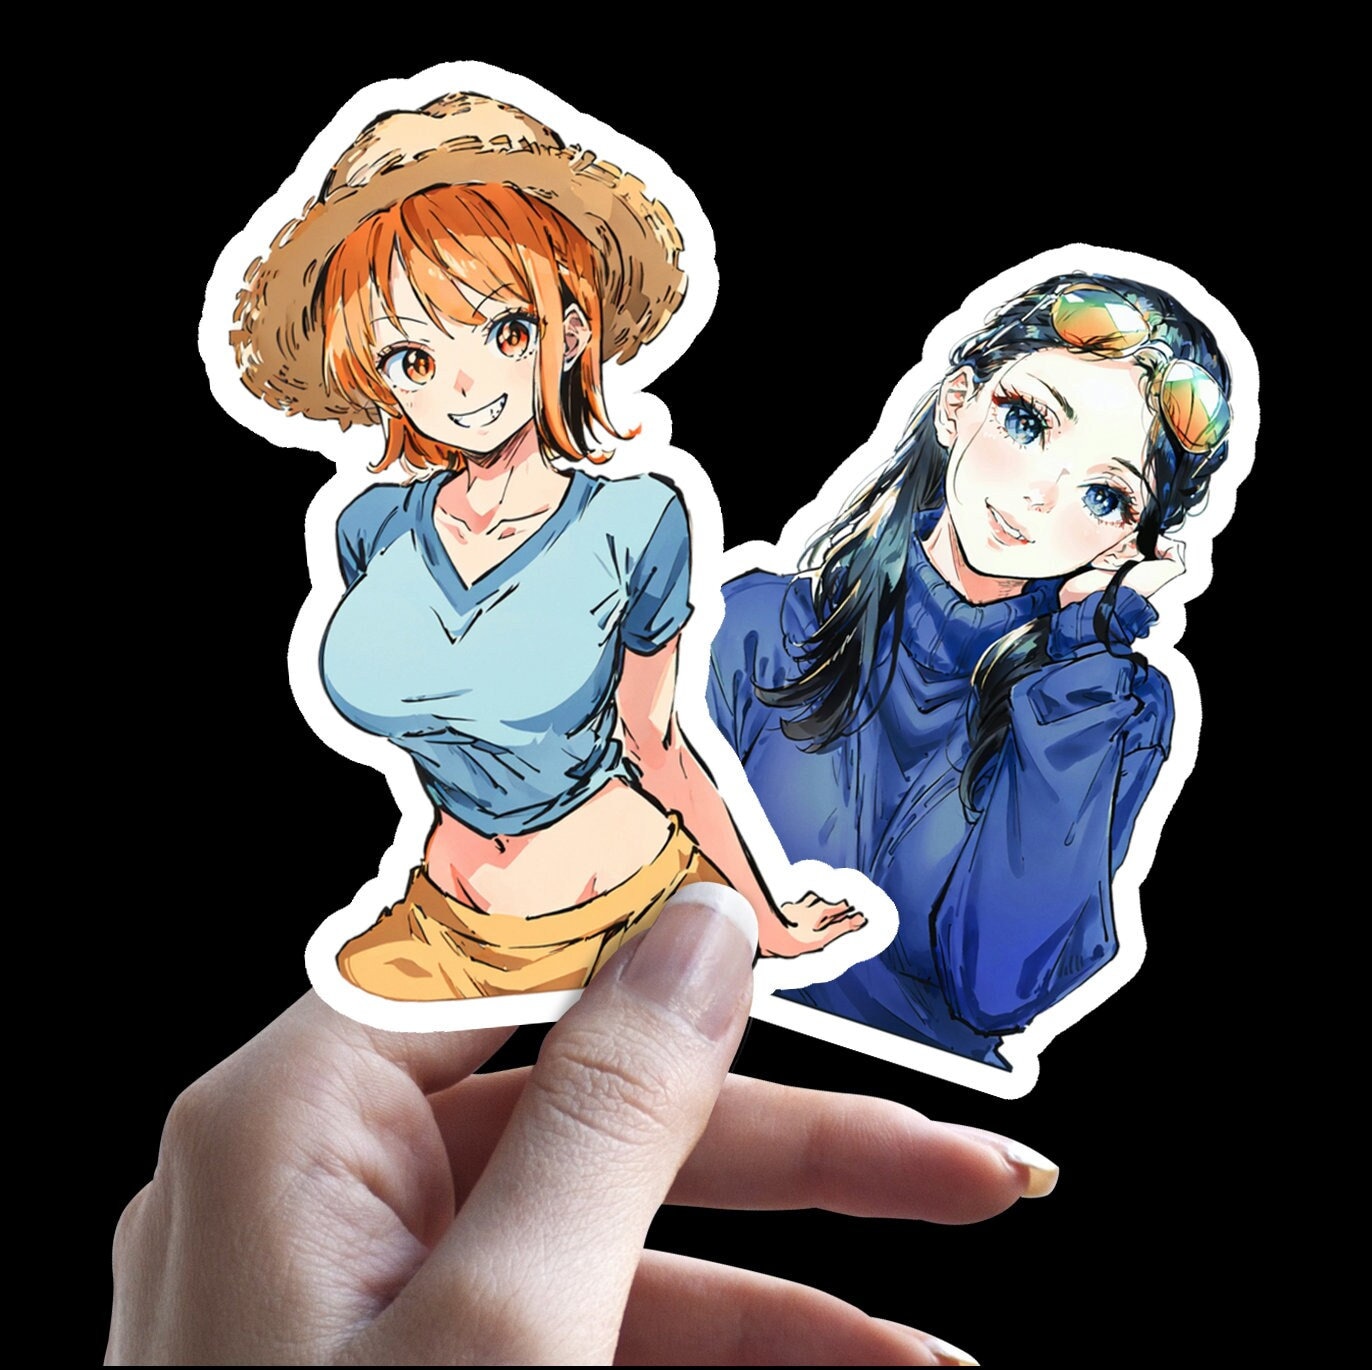 Sticker autocollant holographique - Nami - One Piece - Stickers